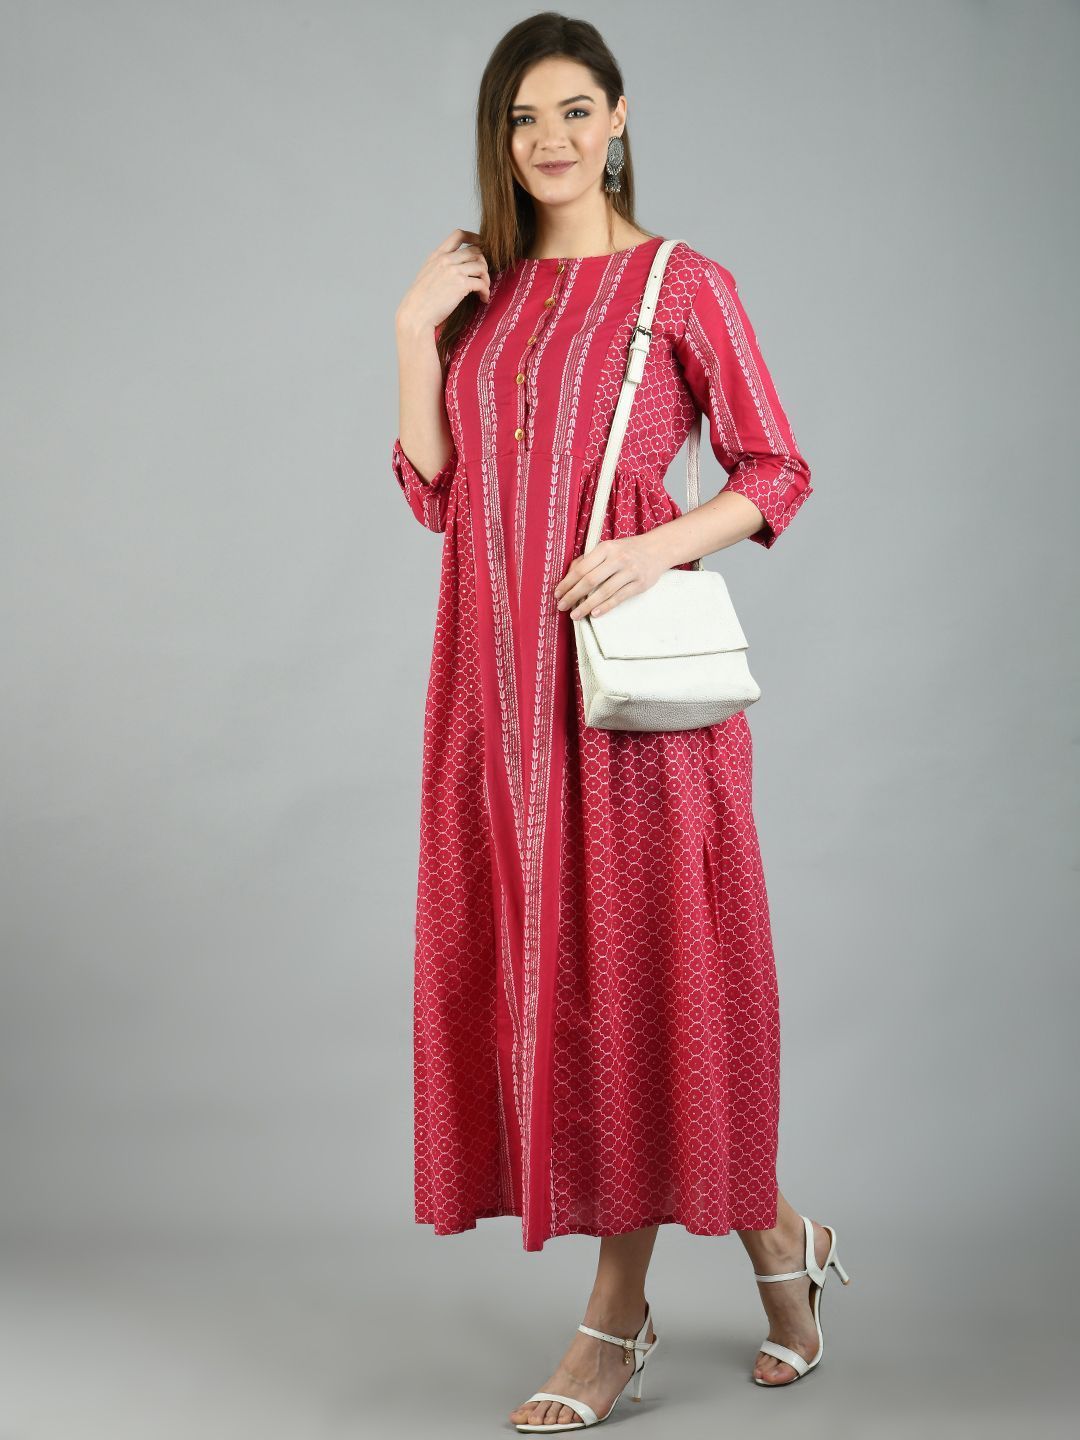 Women's Pink Cotton Printed 3/4 Sleeve Round Neck Casual Dress - Myshka